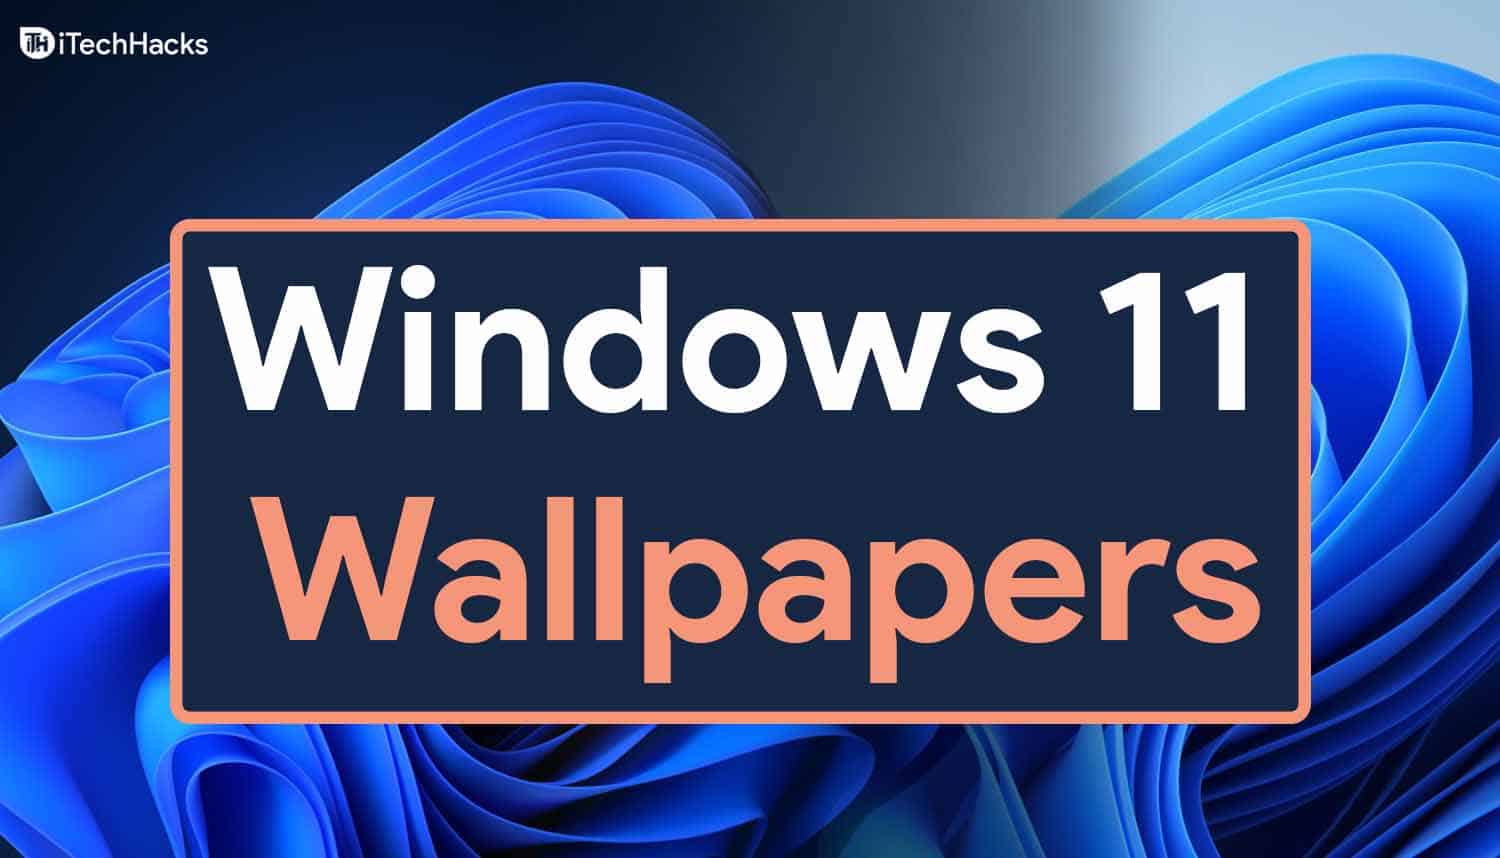 Windows 11 2021 Wallpapers